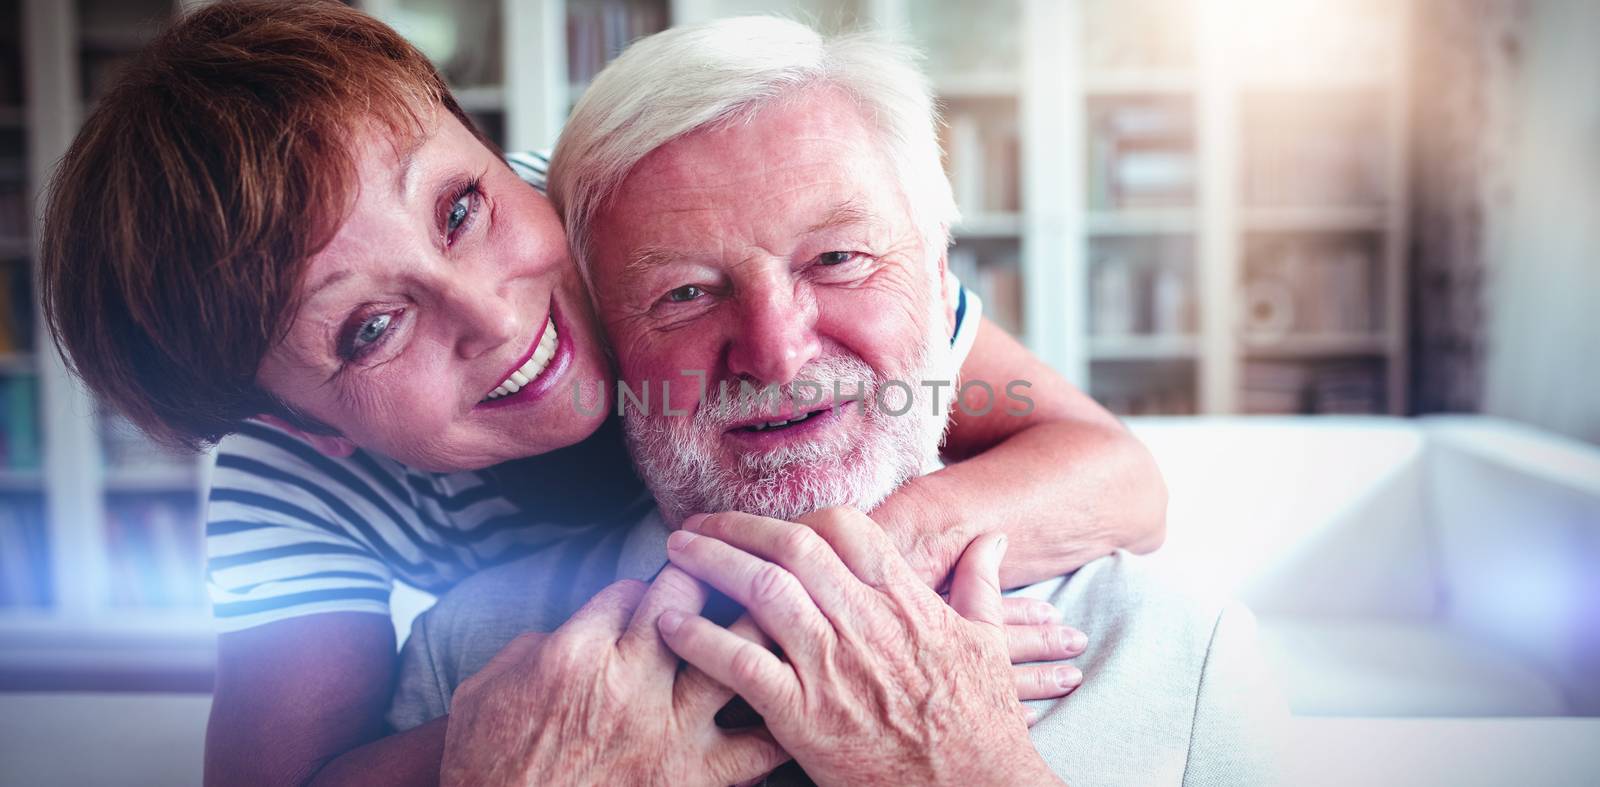 Senior woman embracing man at home by Wavebreakmedia